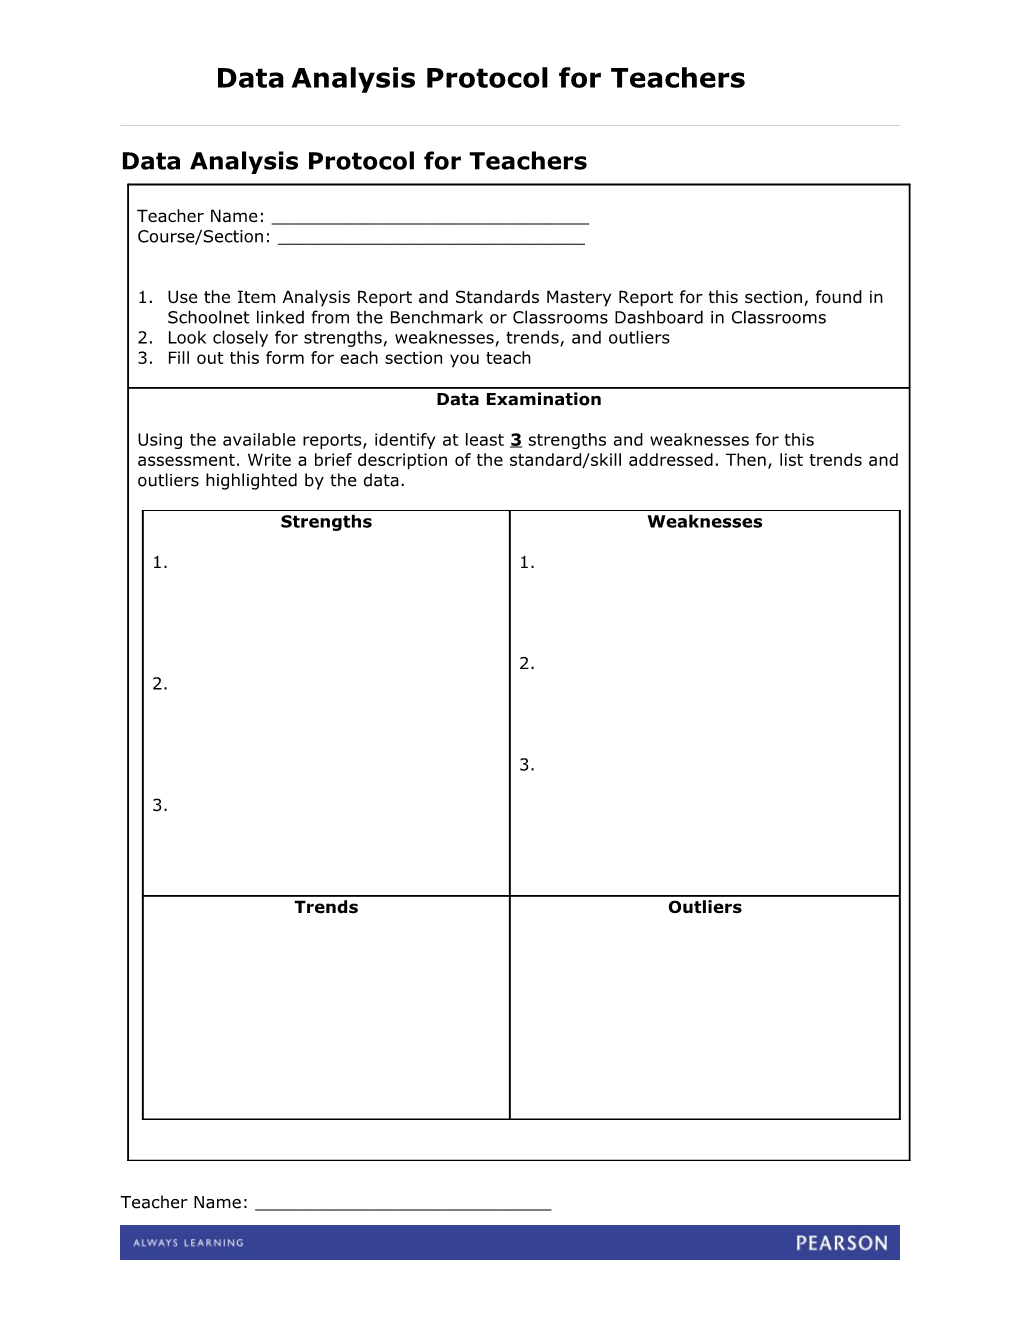 Data Analysis Protocol for Teachers